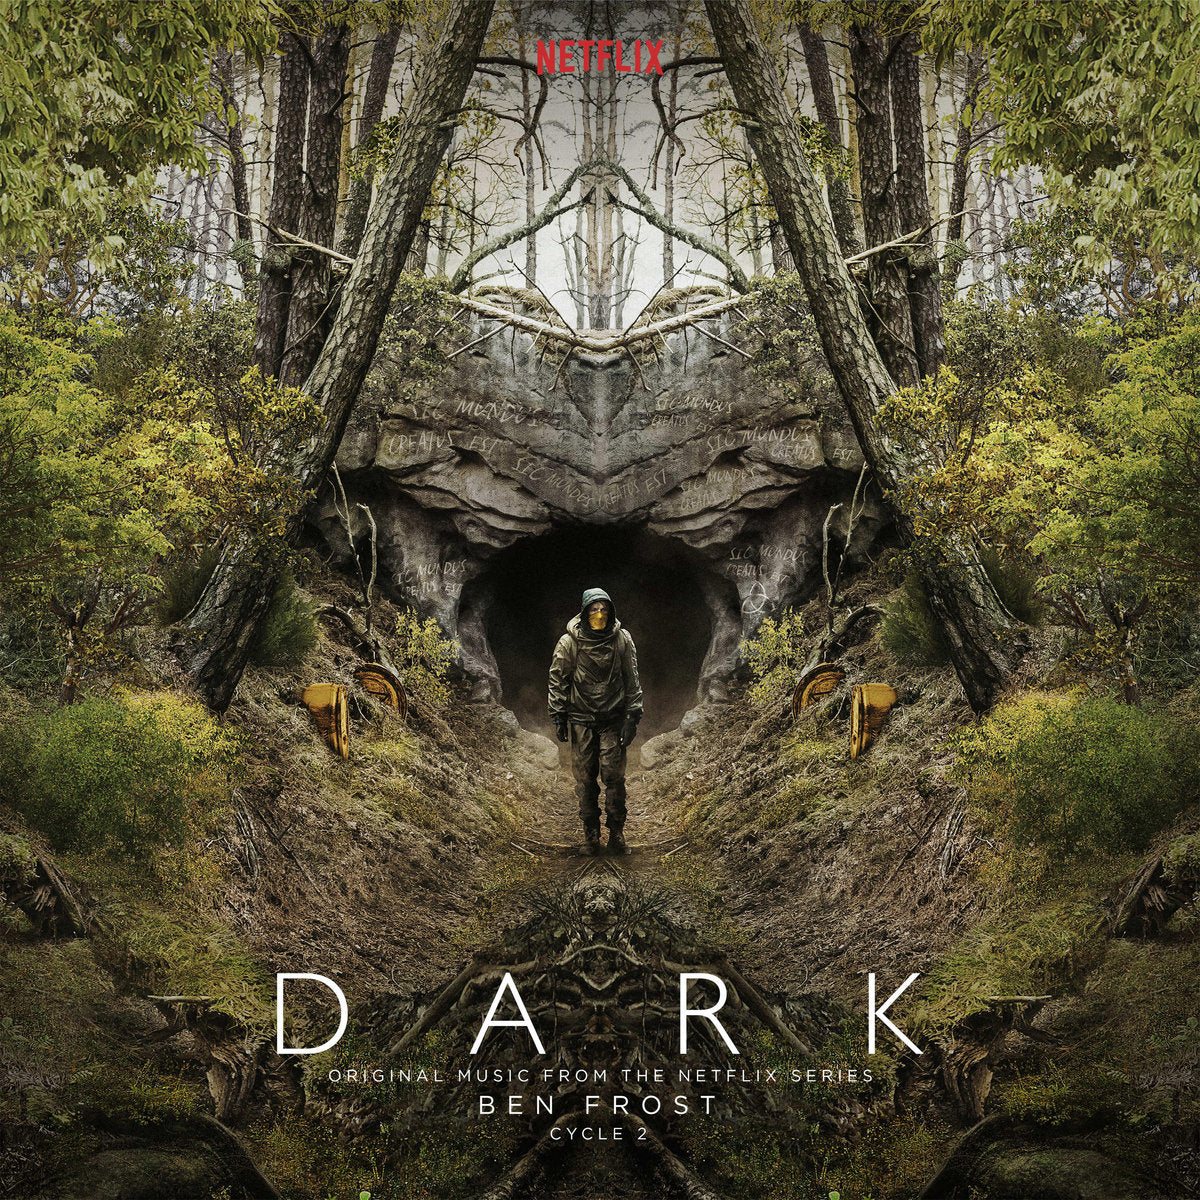 BEN FROST "Dark: Cycle 2 (Original Music From The Netflix Series)" LP